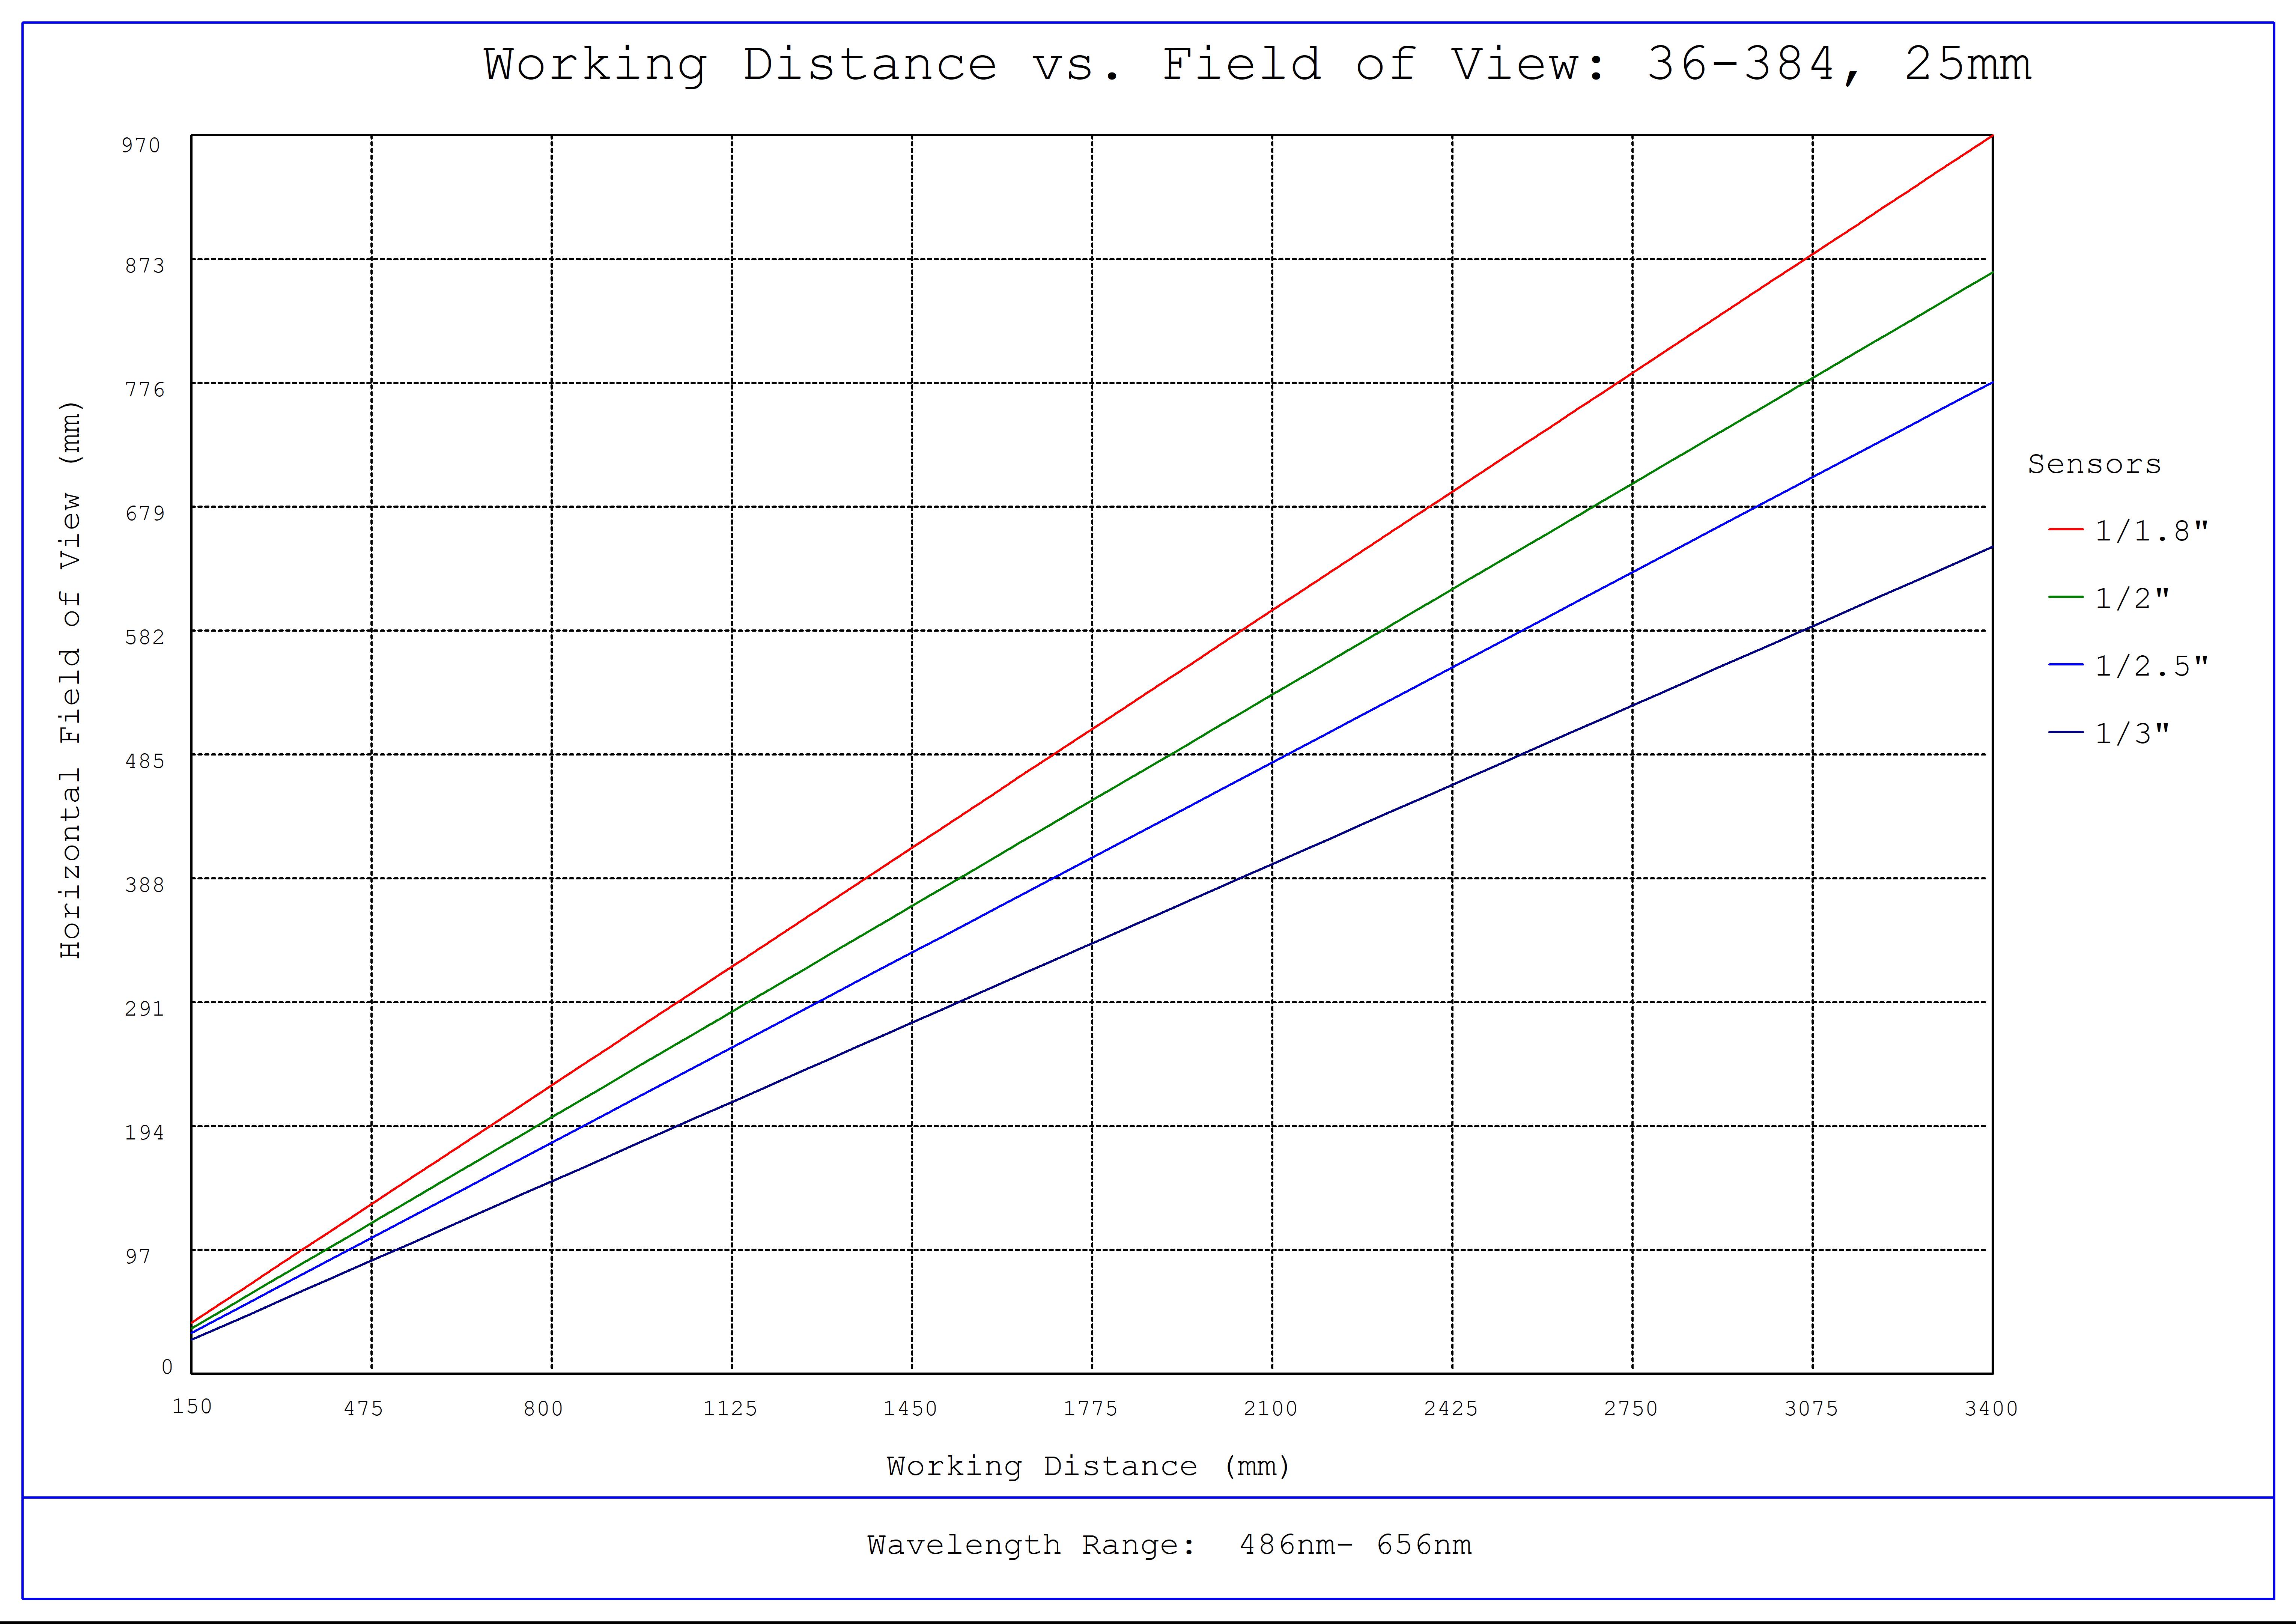 #36-384, 25mm FL f/2.5, Rugged Blue Series M12 Lens, Working Distance versus Field of View Plot